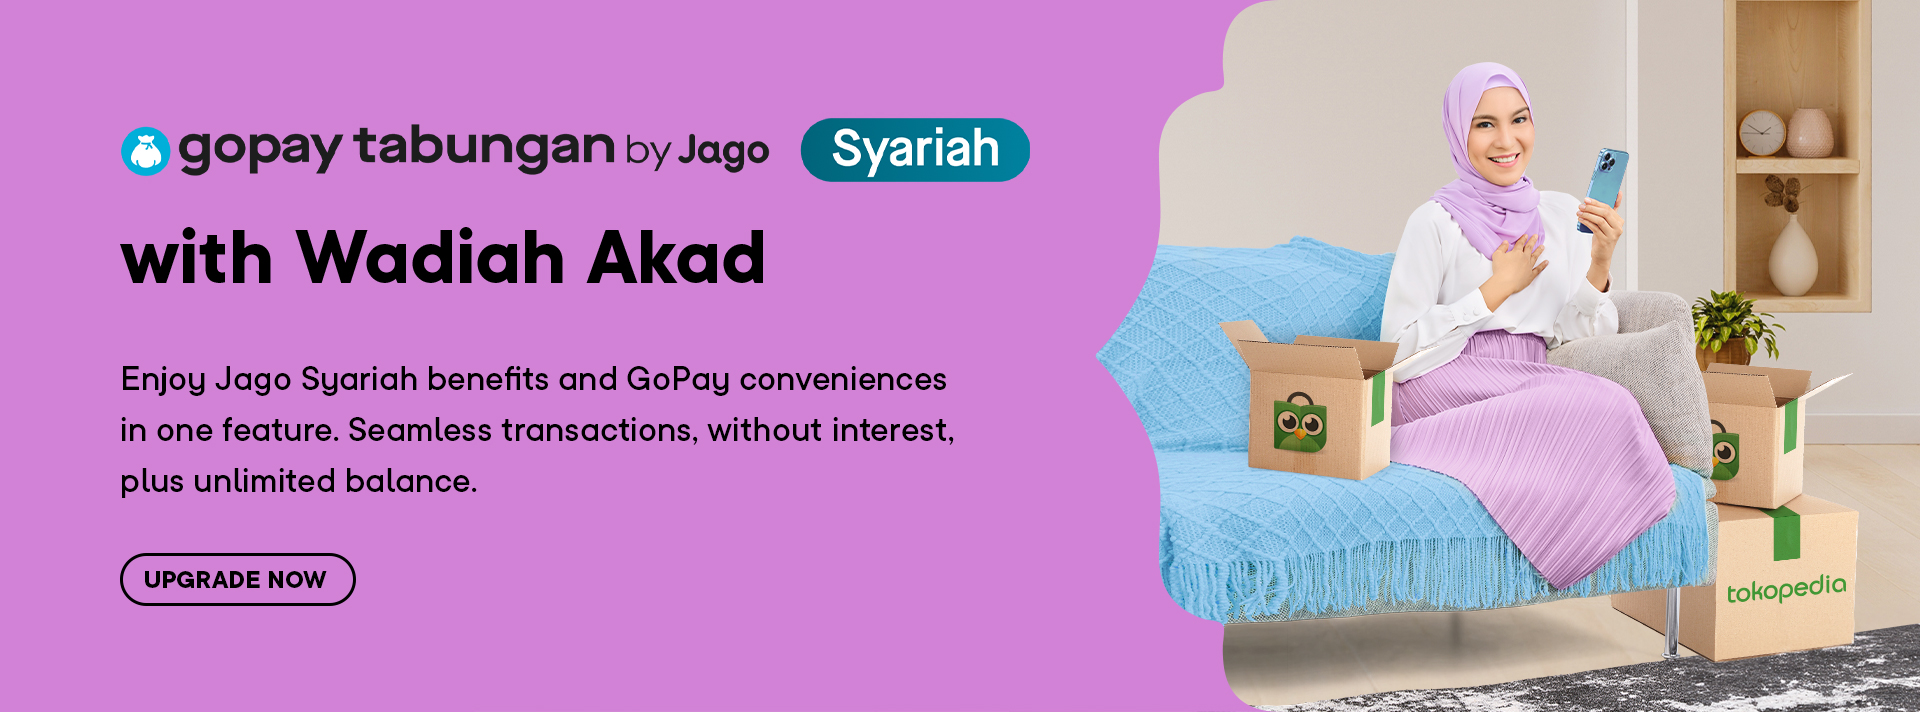 GoPay Tabungan by Jago Nikmati keunggulan Jago & kemudahan GoPay dalam 1 fitur. Bayar praktis, bunga 2,5% p.a. tanpa batas saldo